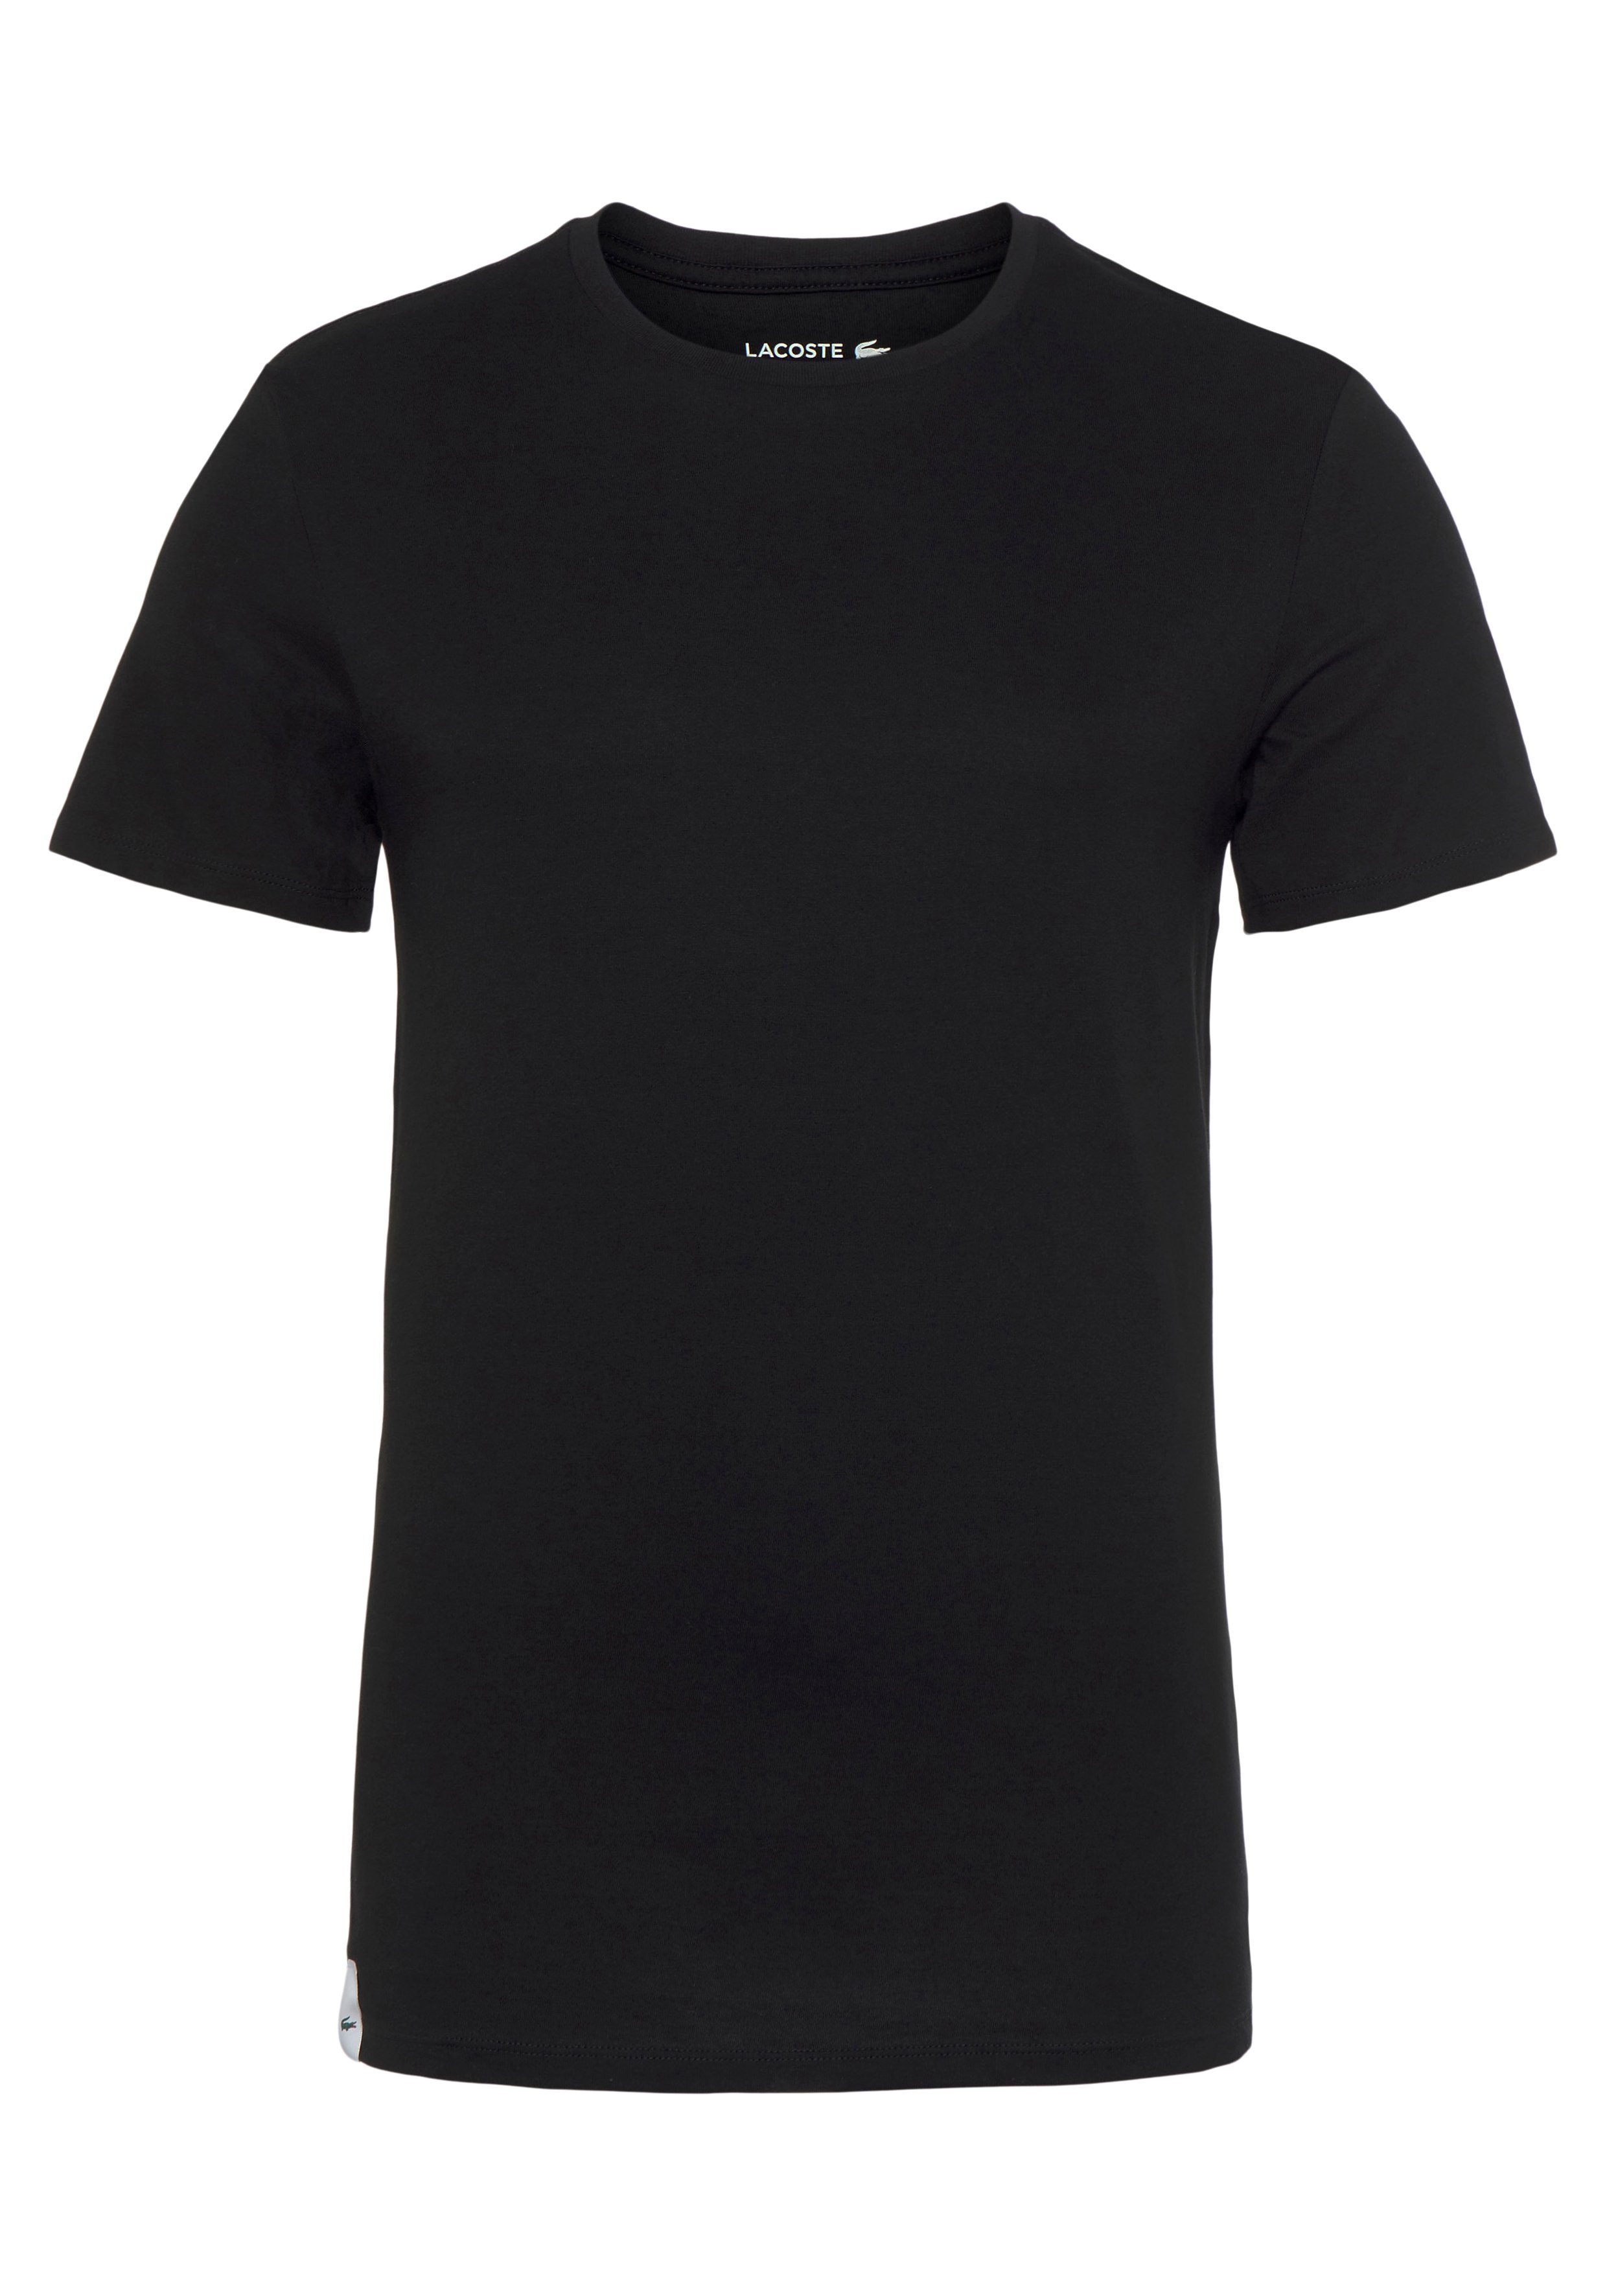 Lacoste T-Shirt (3er-Pack) black Baumwollmaterial Hautgefühl Atmungsaktives angenehmes für